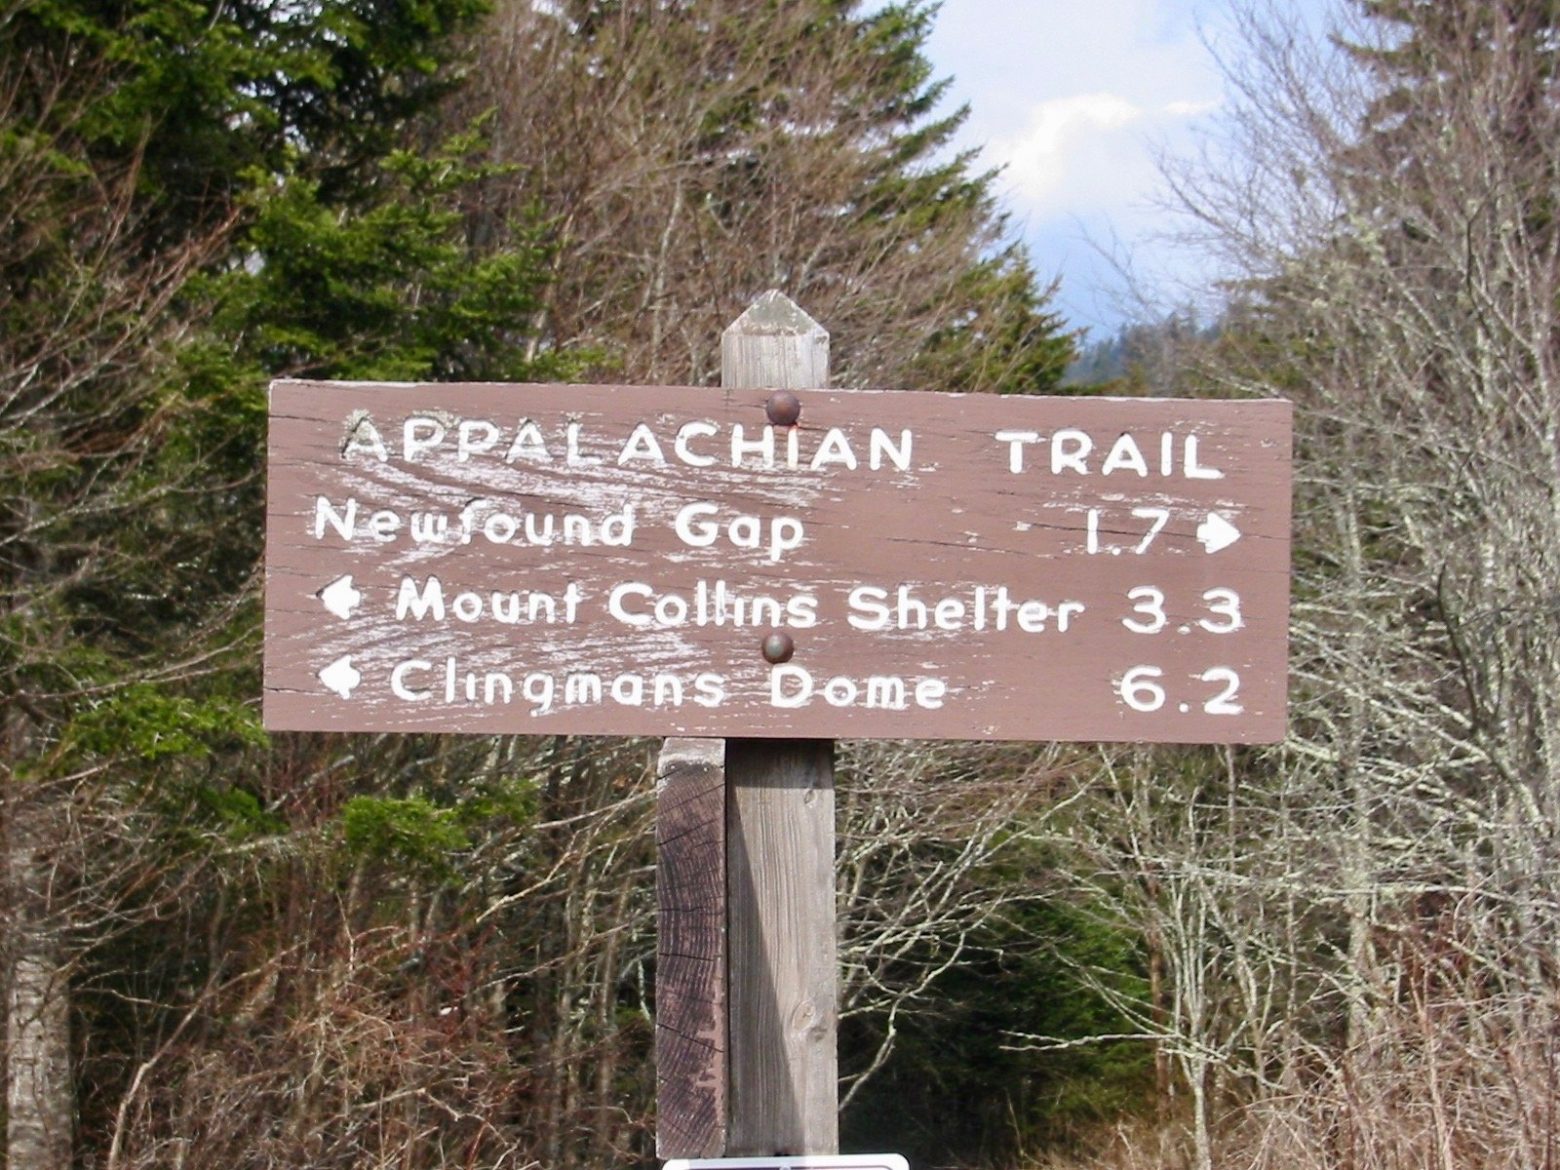 Trail sign at Indian Gap